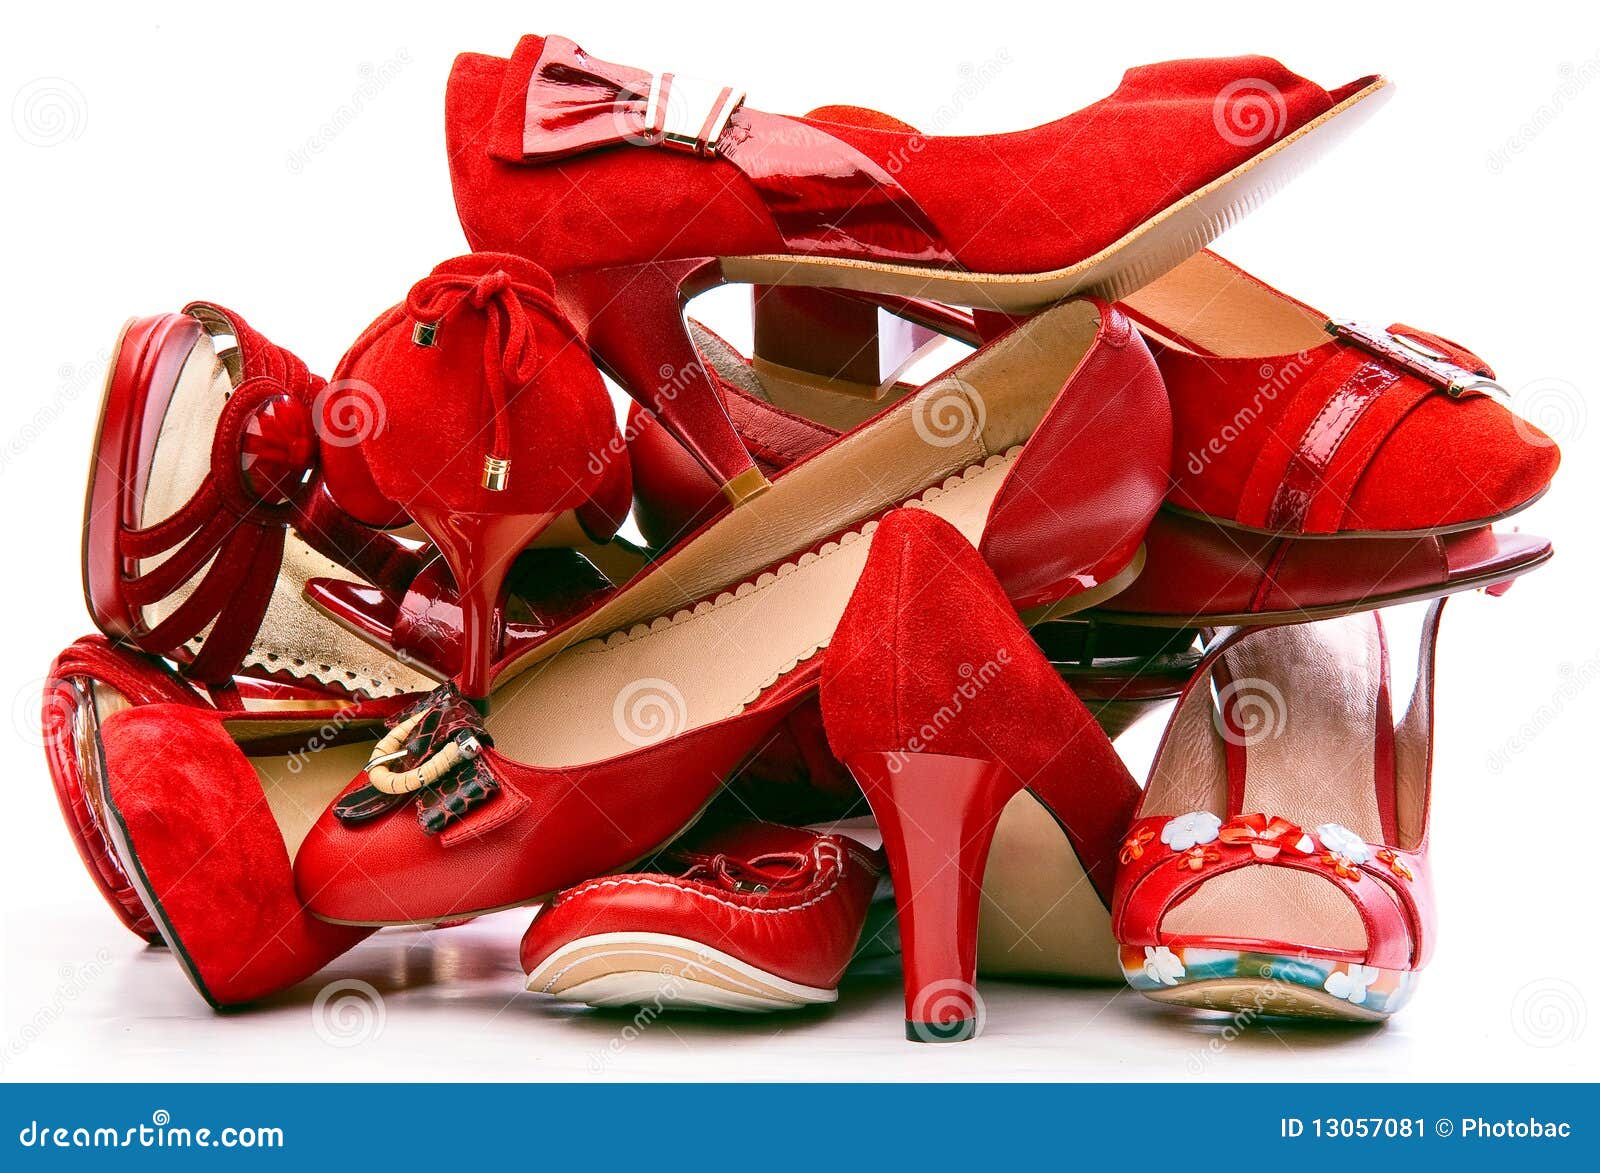 deborah samson recommends pile of high heels pic